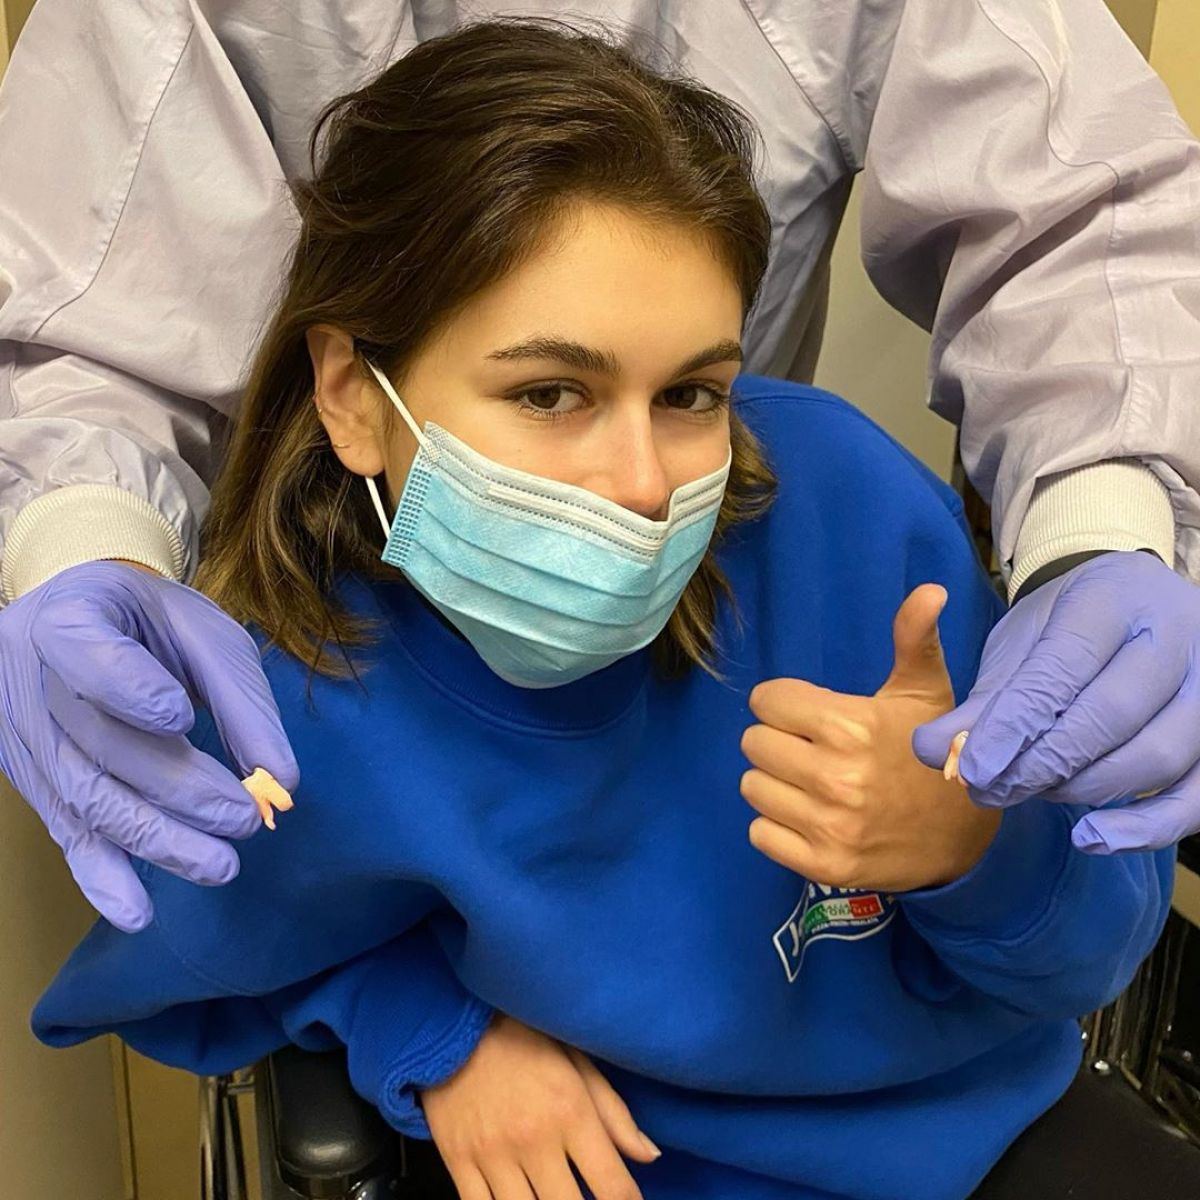 Kaia Gerber Gets Her Wisdom Teeth Removed - Instagram Photos 2020/10/24